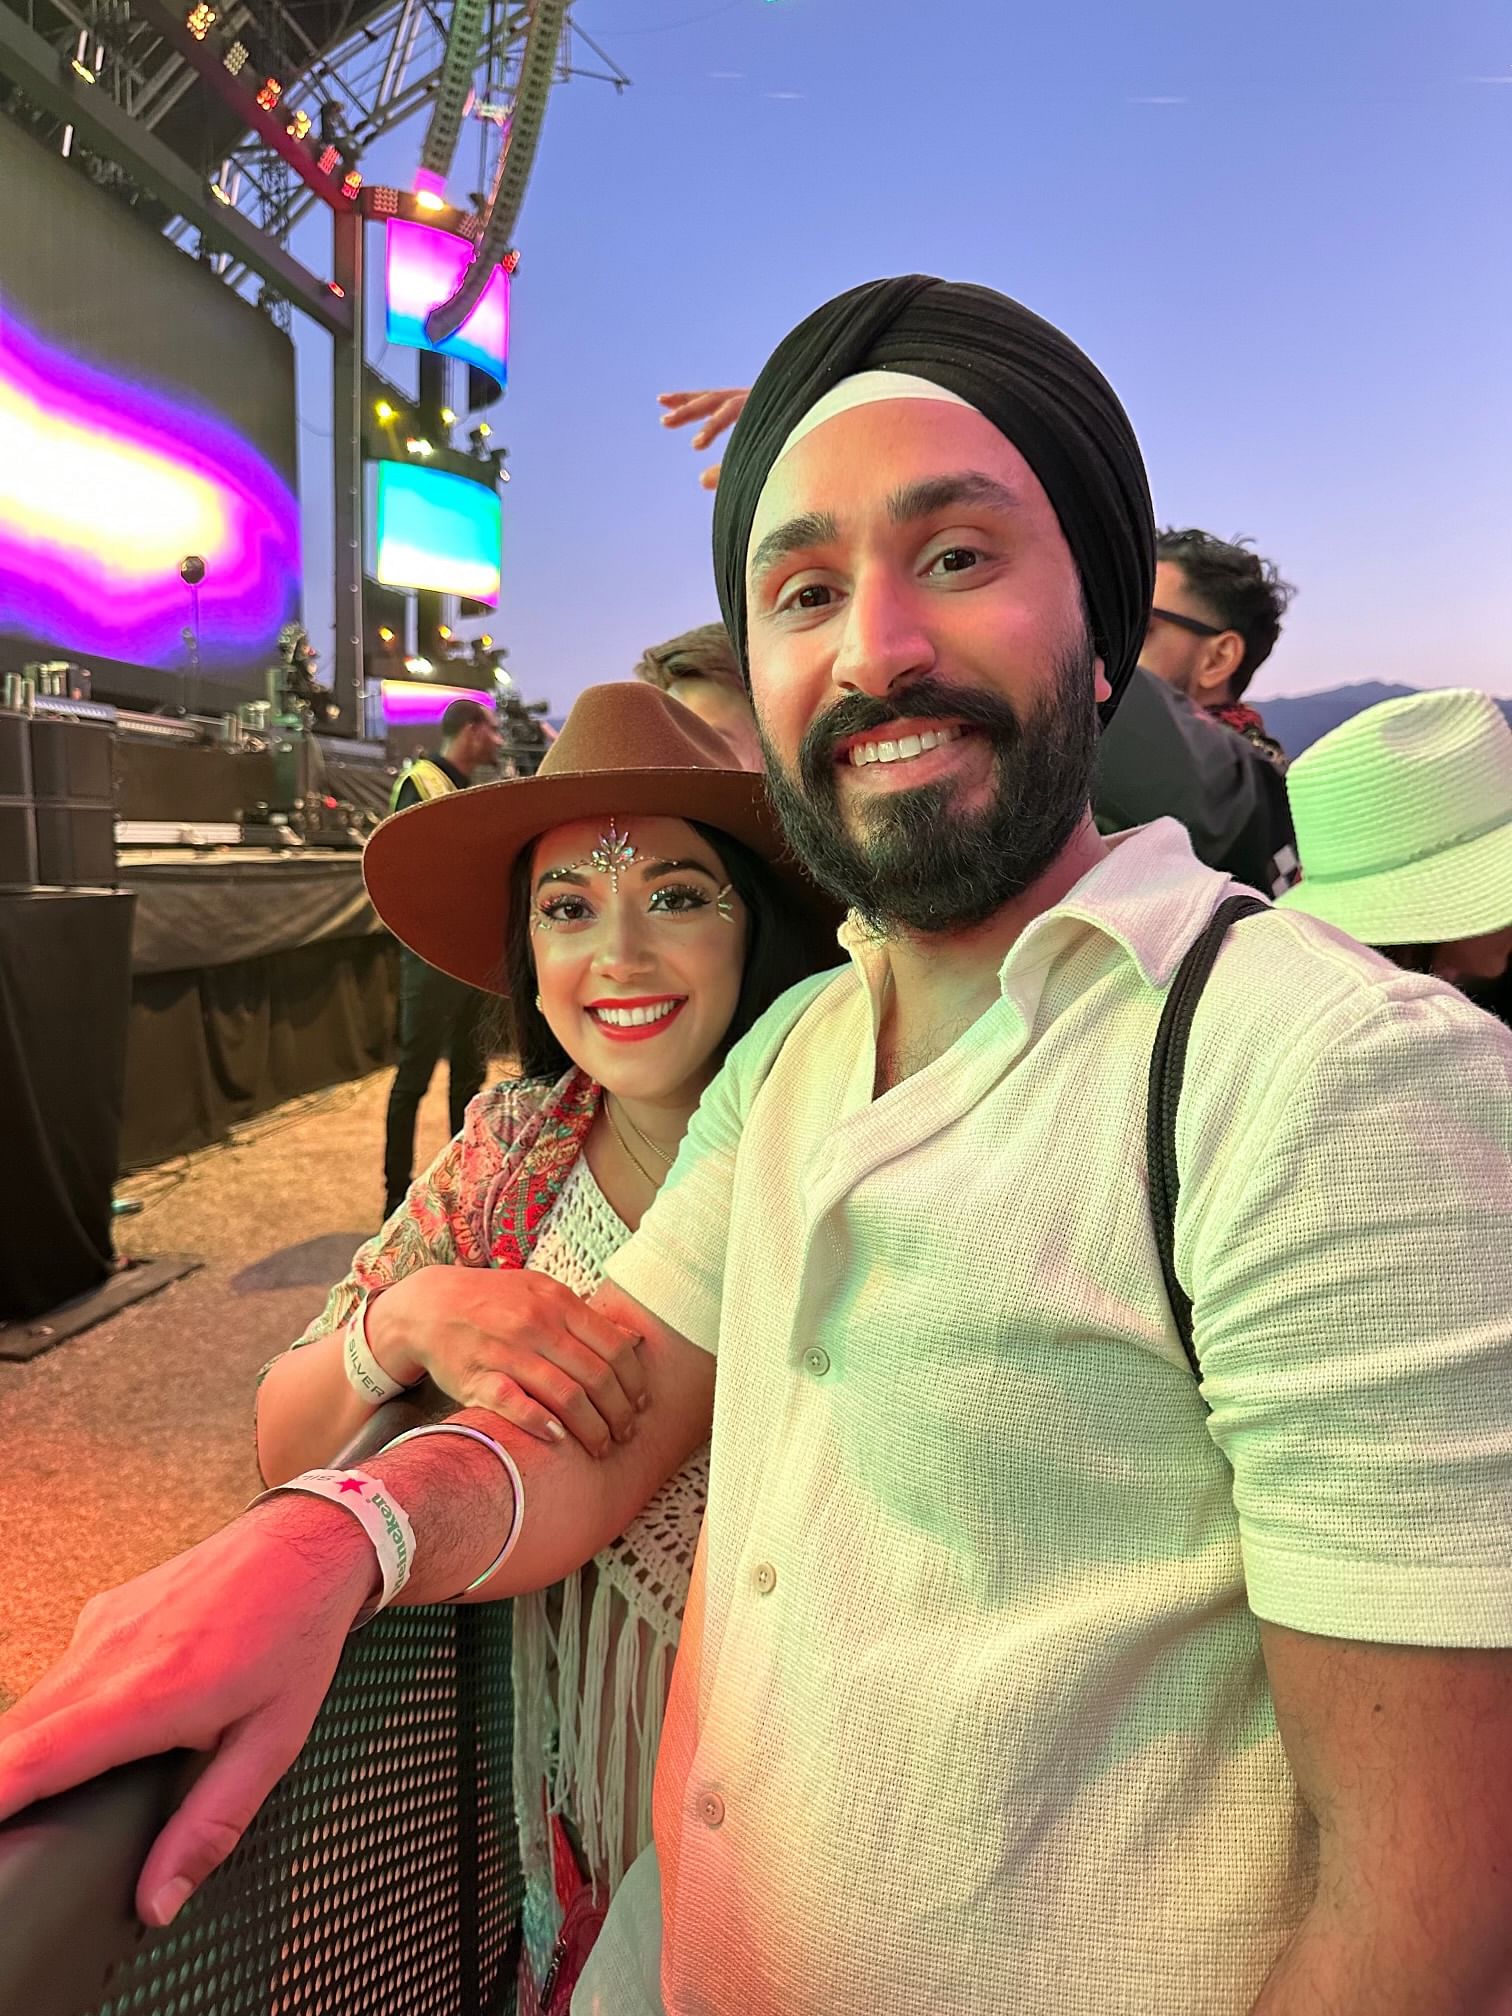 GOAT for a Reason, Diljit Dosanjh 'Salutes' Indian American Couple at  Coachella